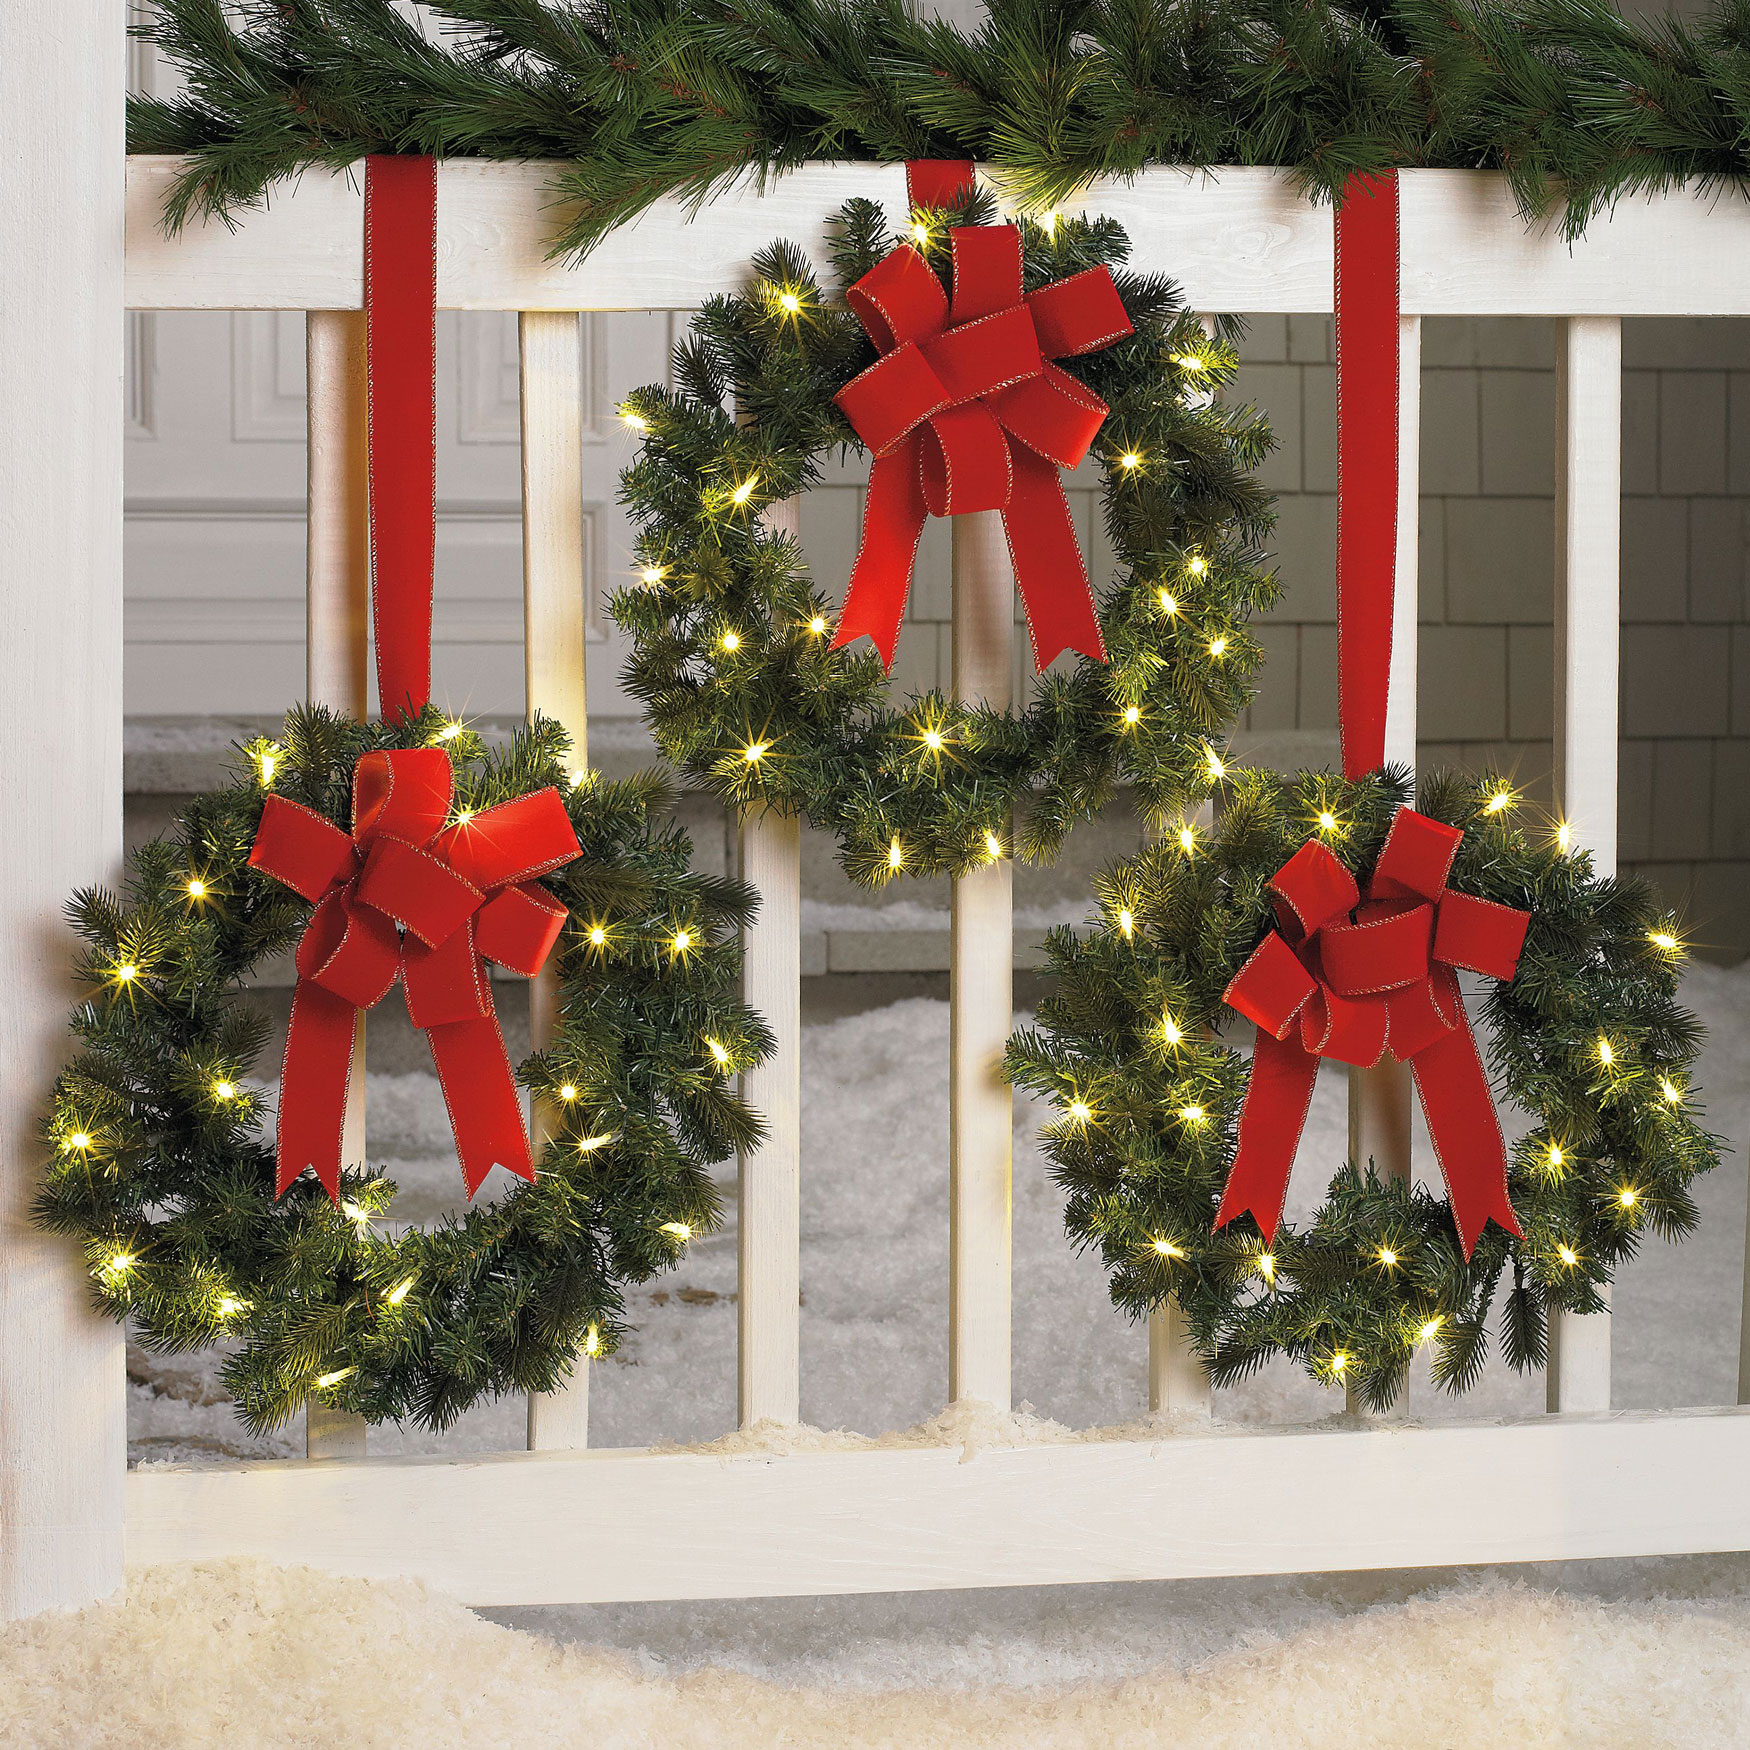 20 Deck Decorating Ideas for Christmas - Trex RainEscape